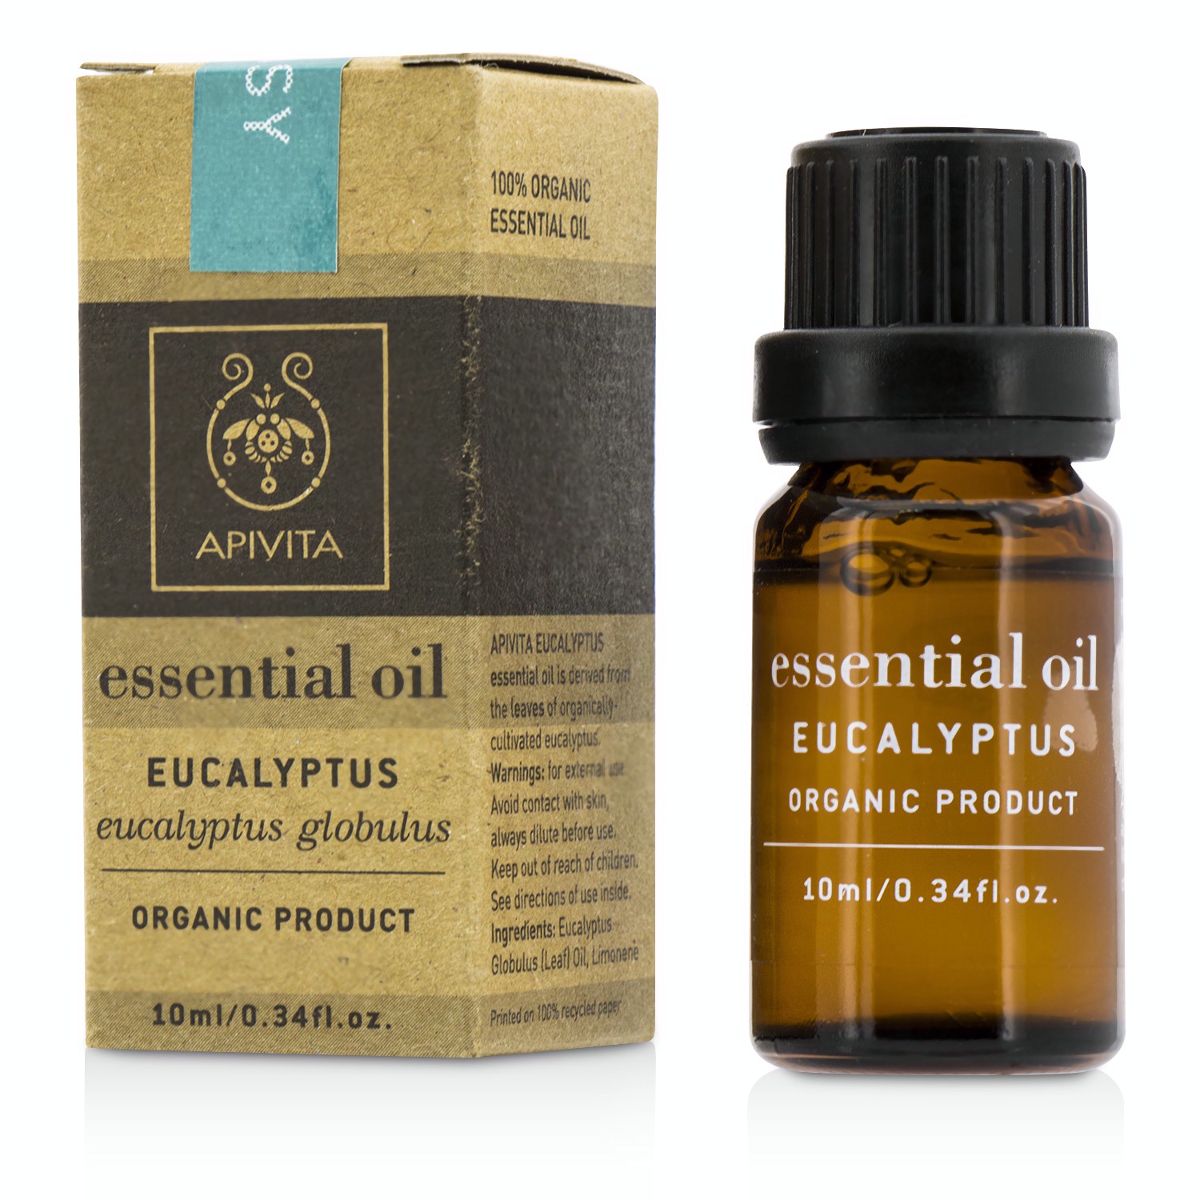 Essential Oil - Eucalyptus Apivita Image